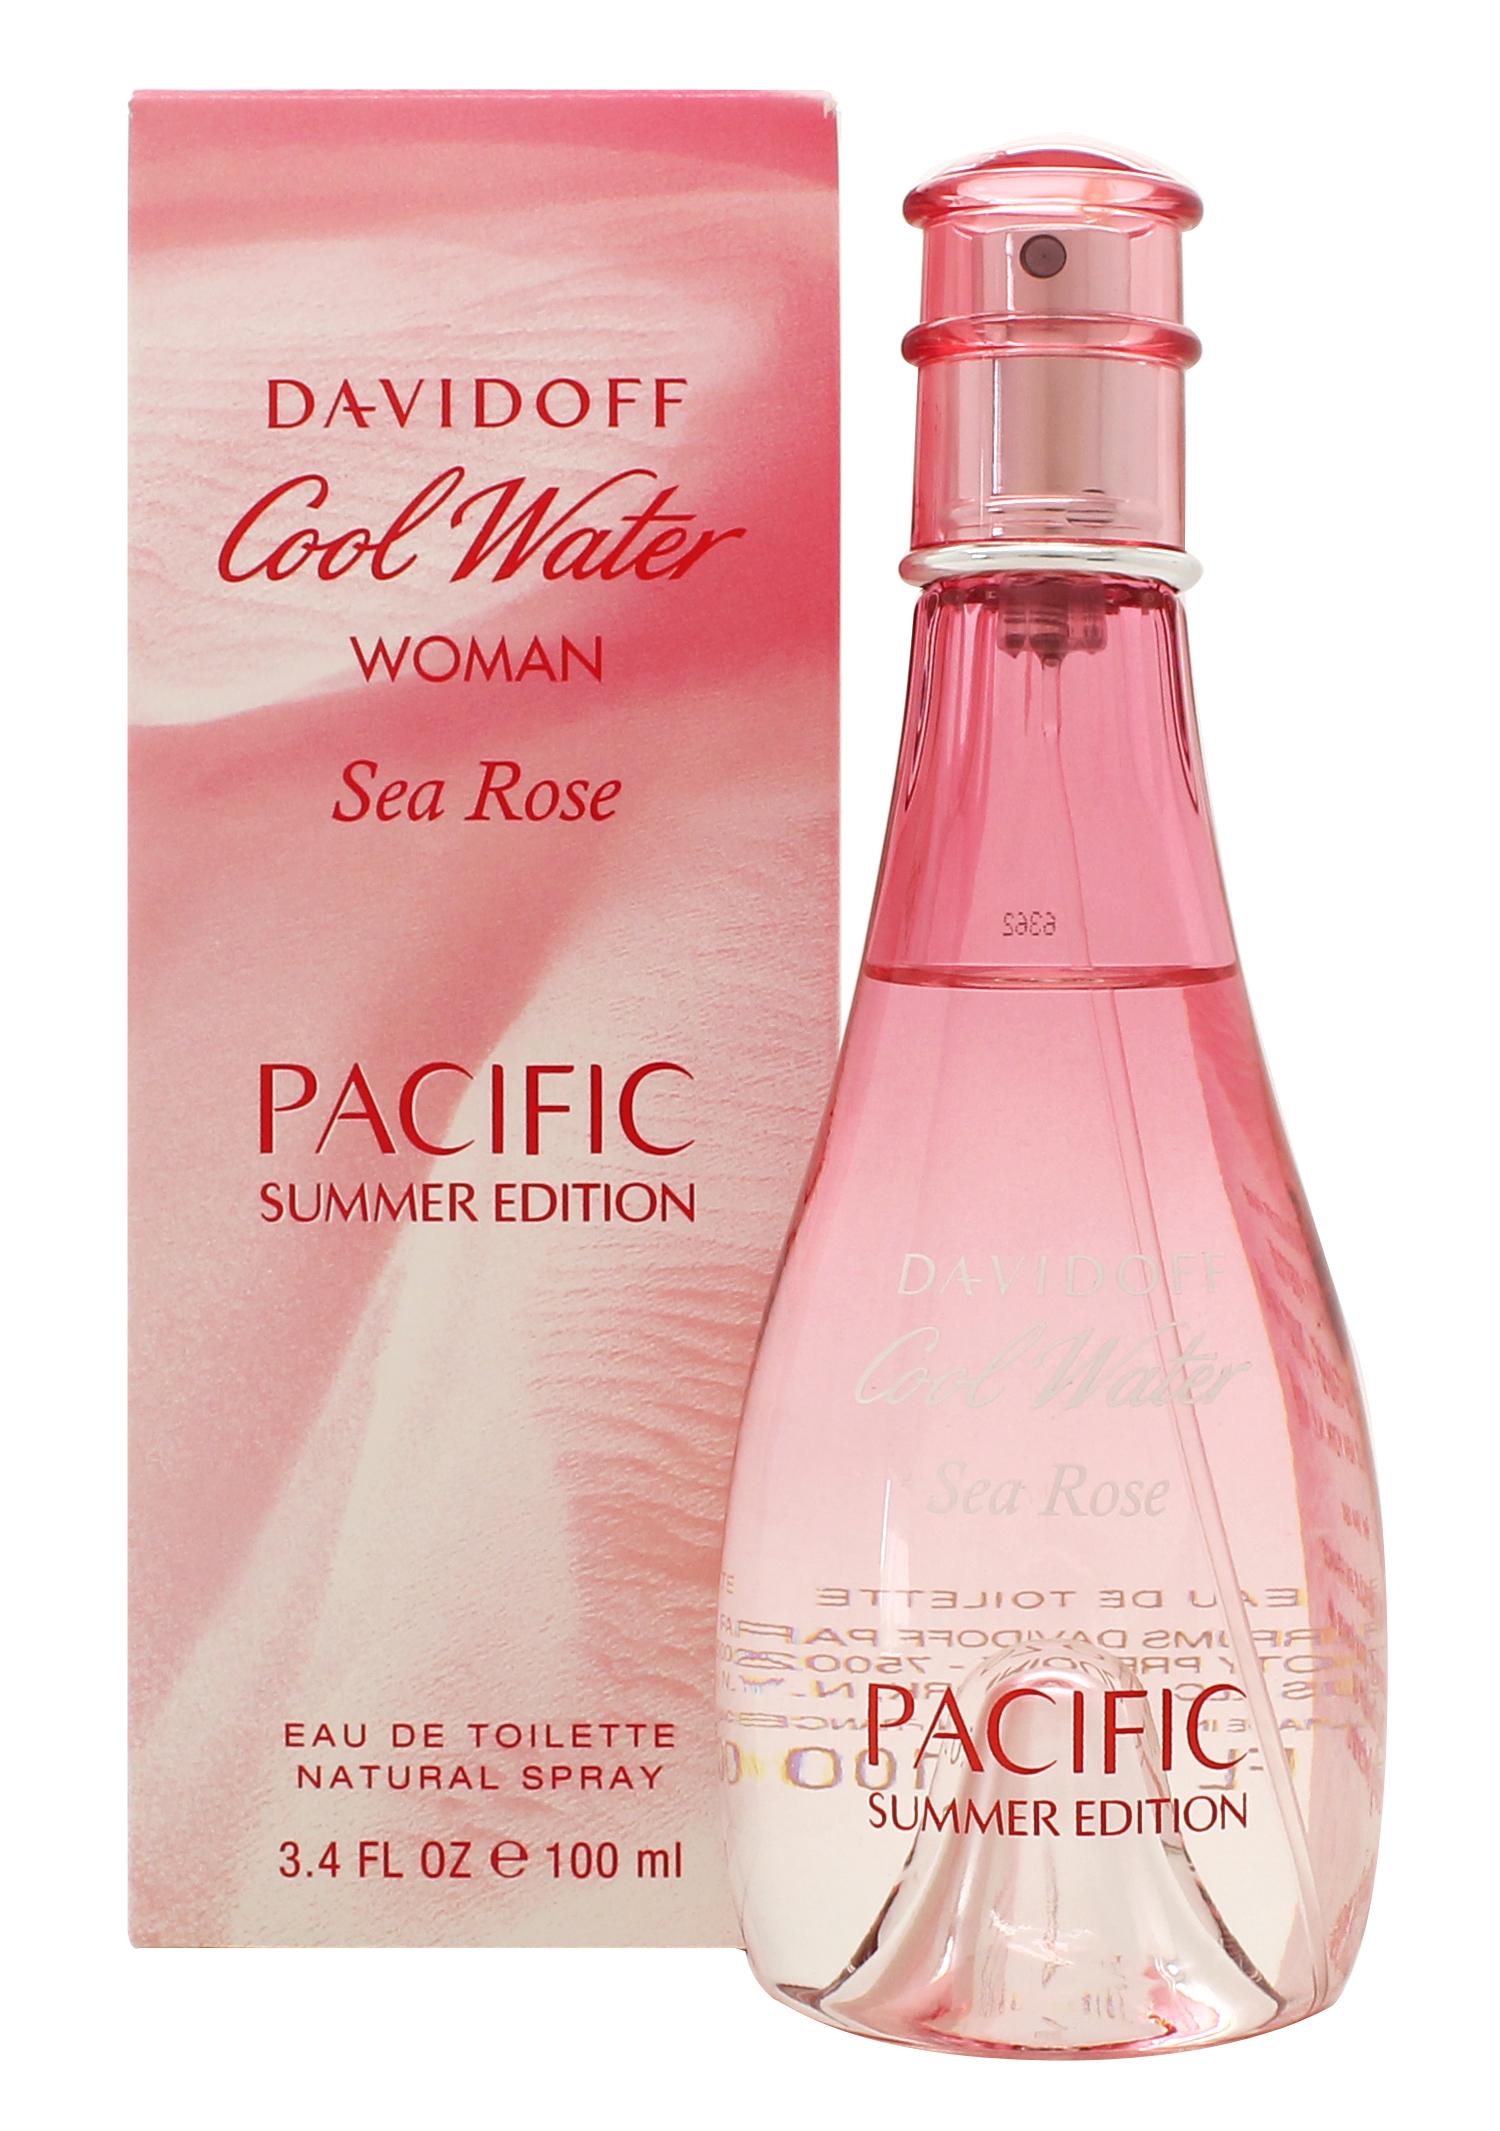 Davidoff Cool Water Woman Sea Rose Pacific Summer Edition Eau de Toilette 100ml Spray